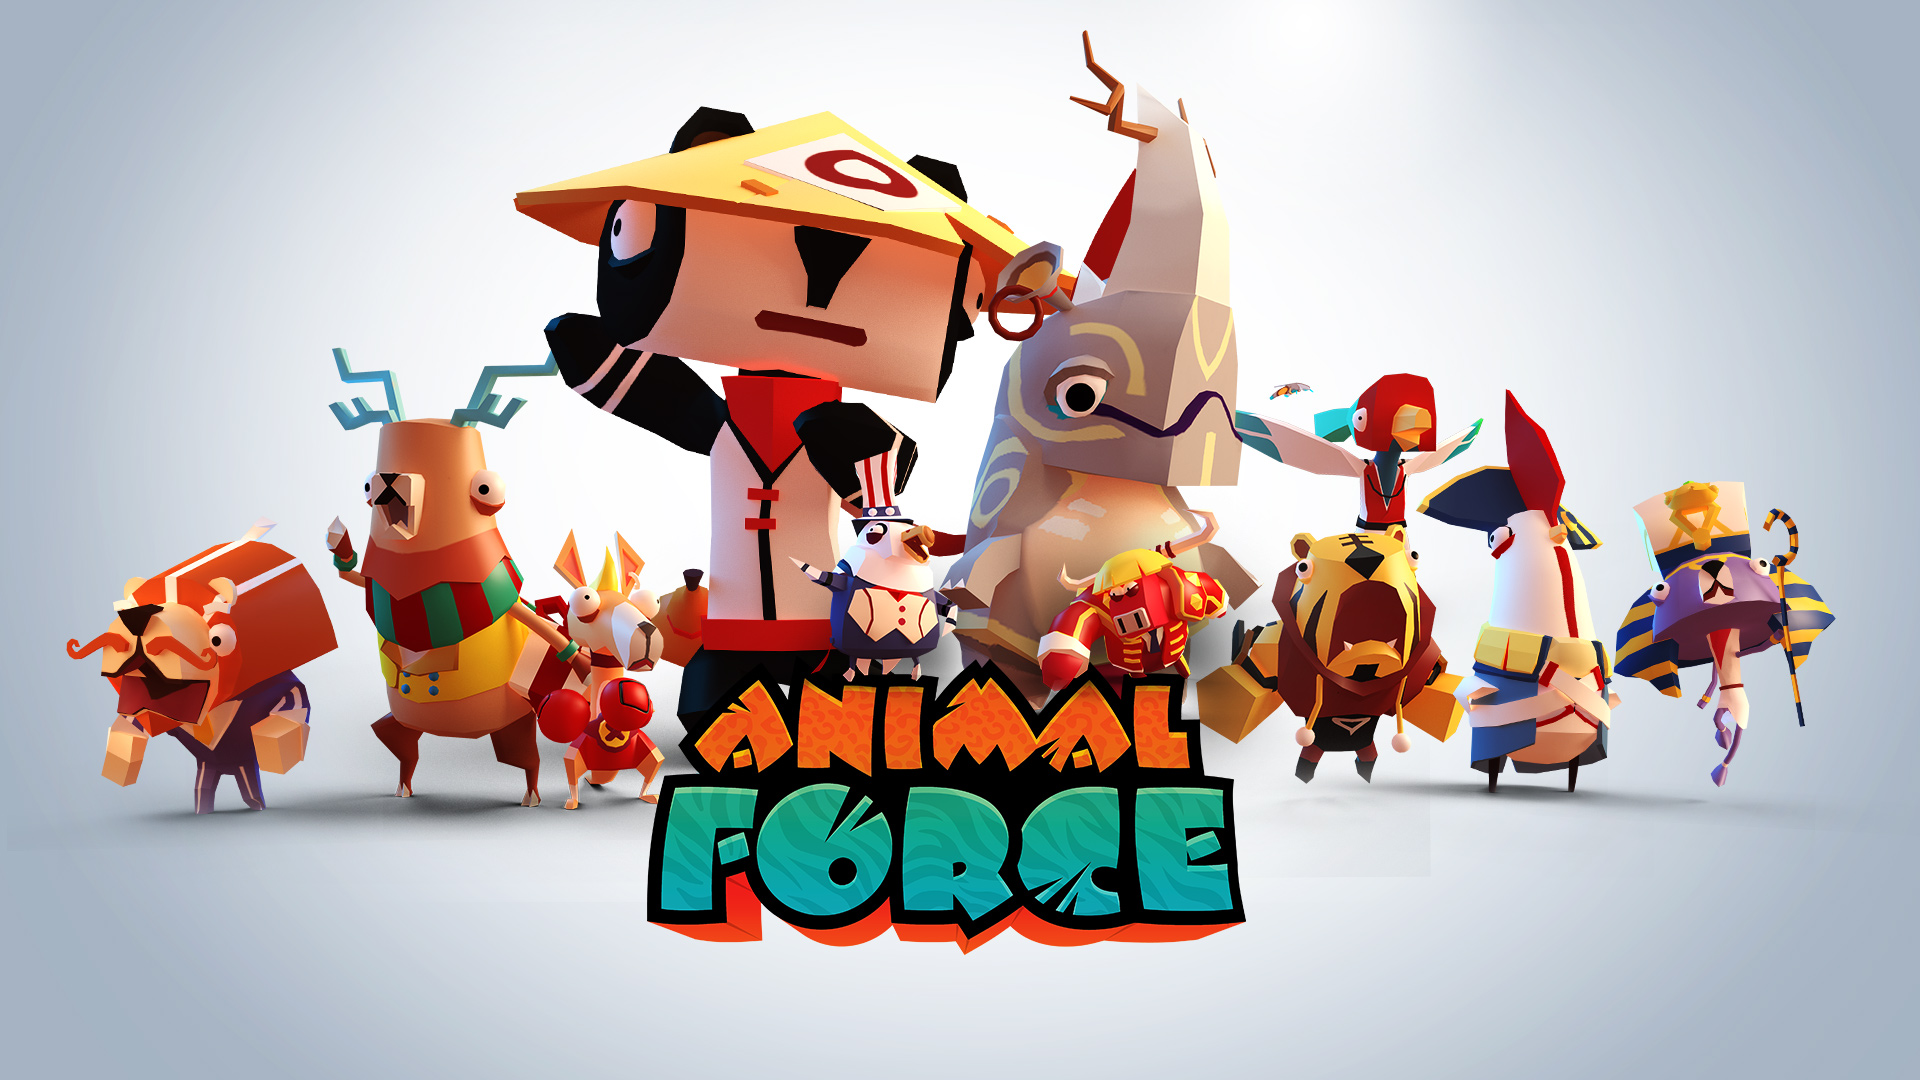 Animal Force logo (Oasis Games)